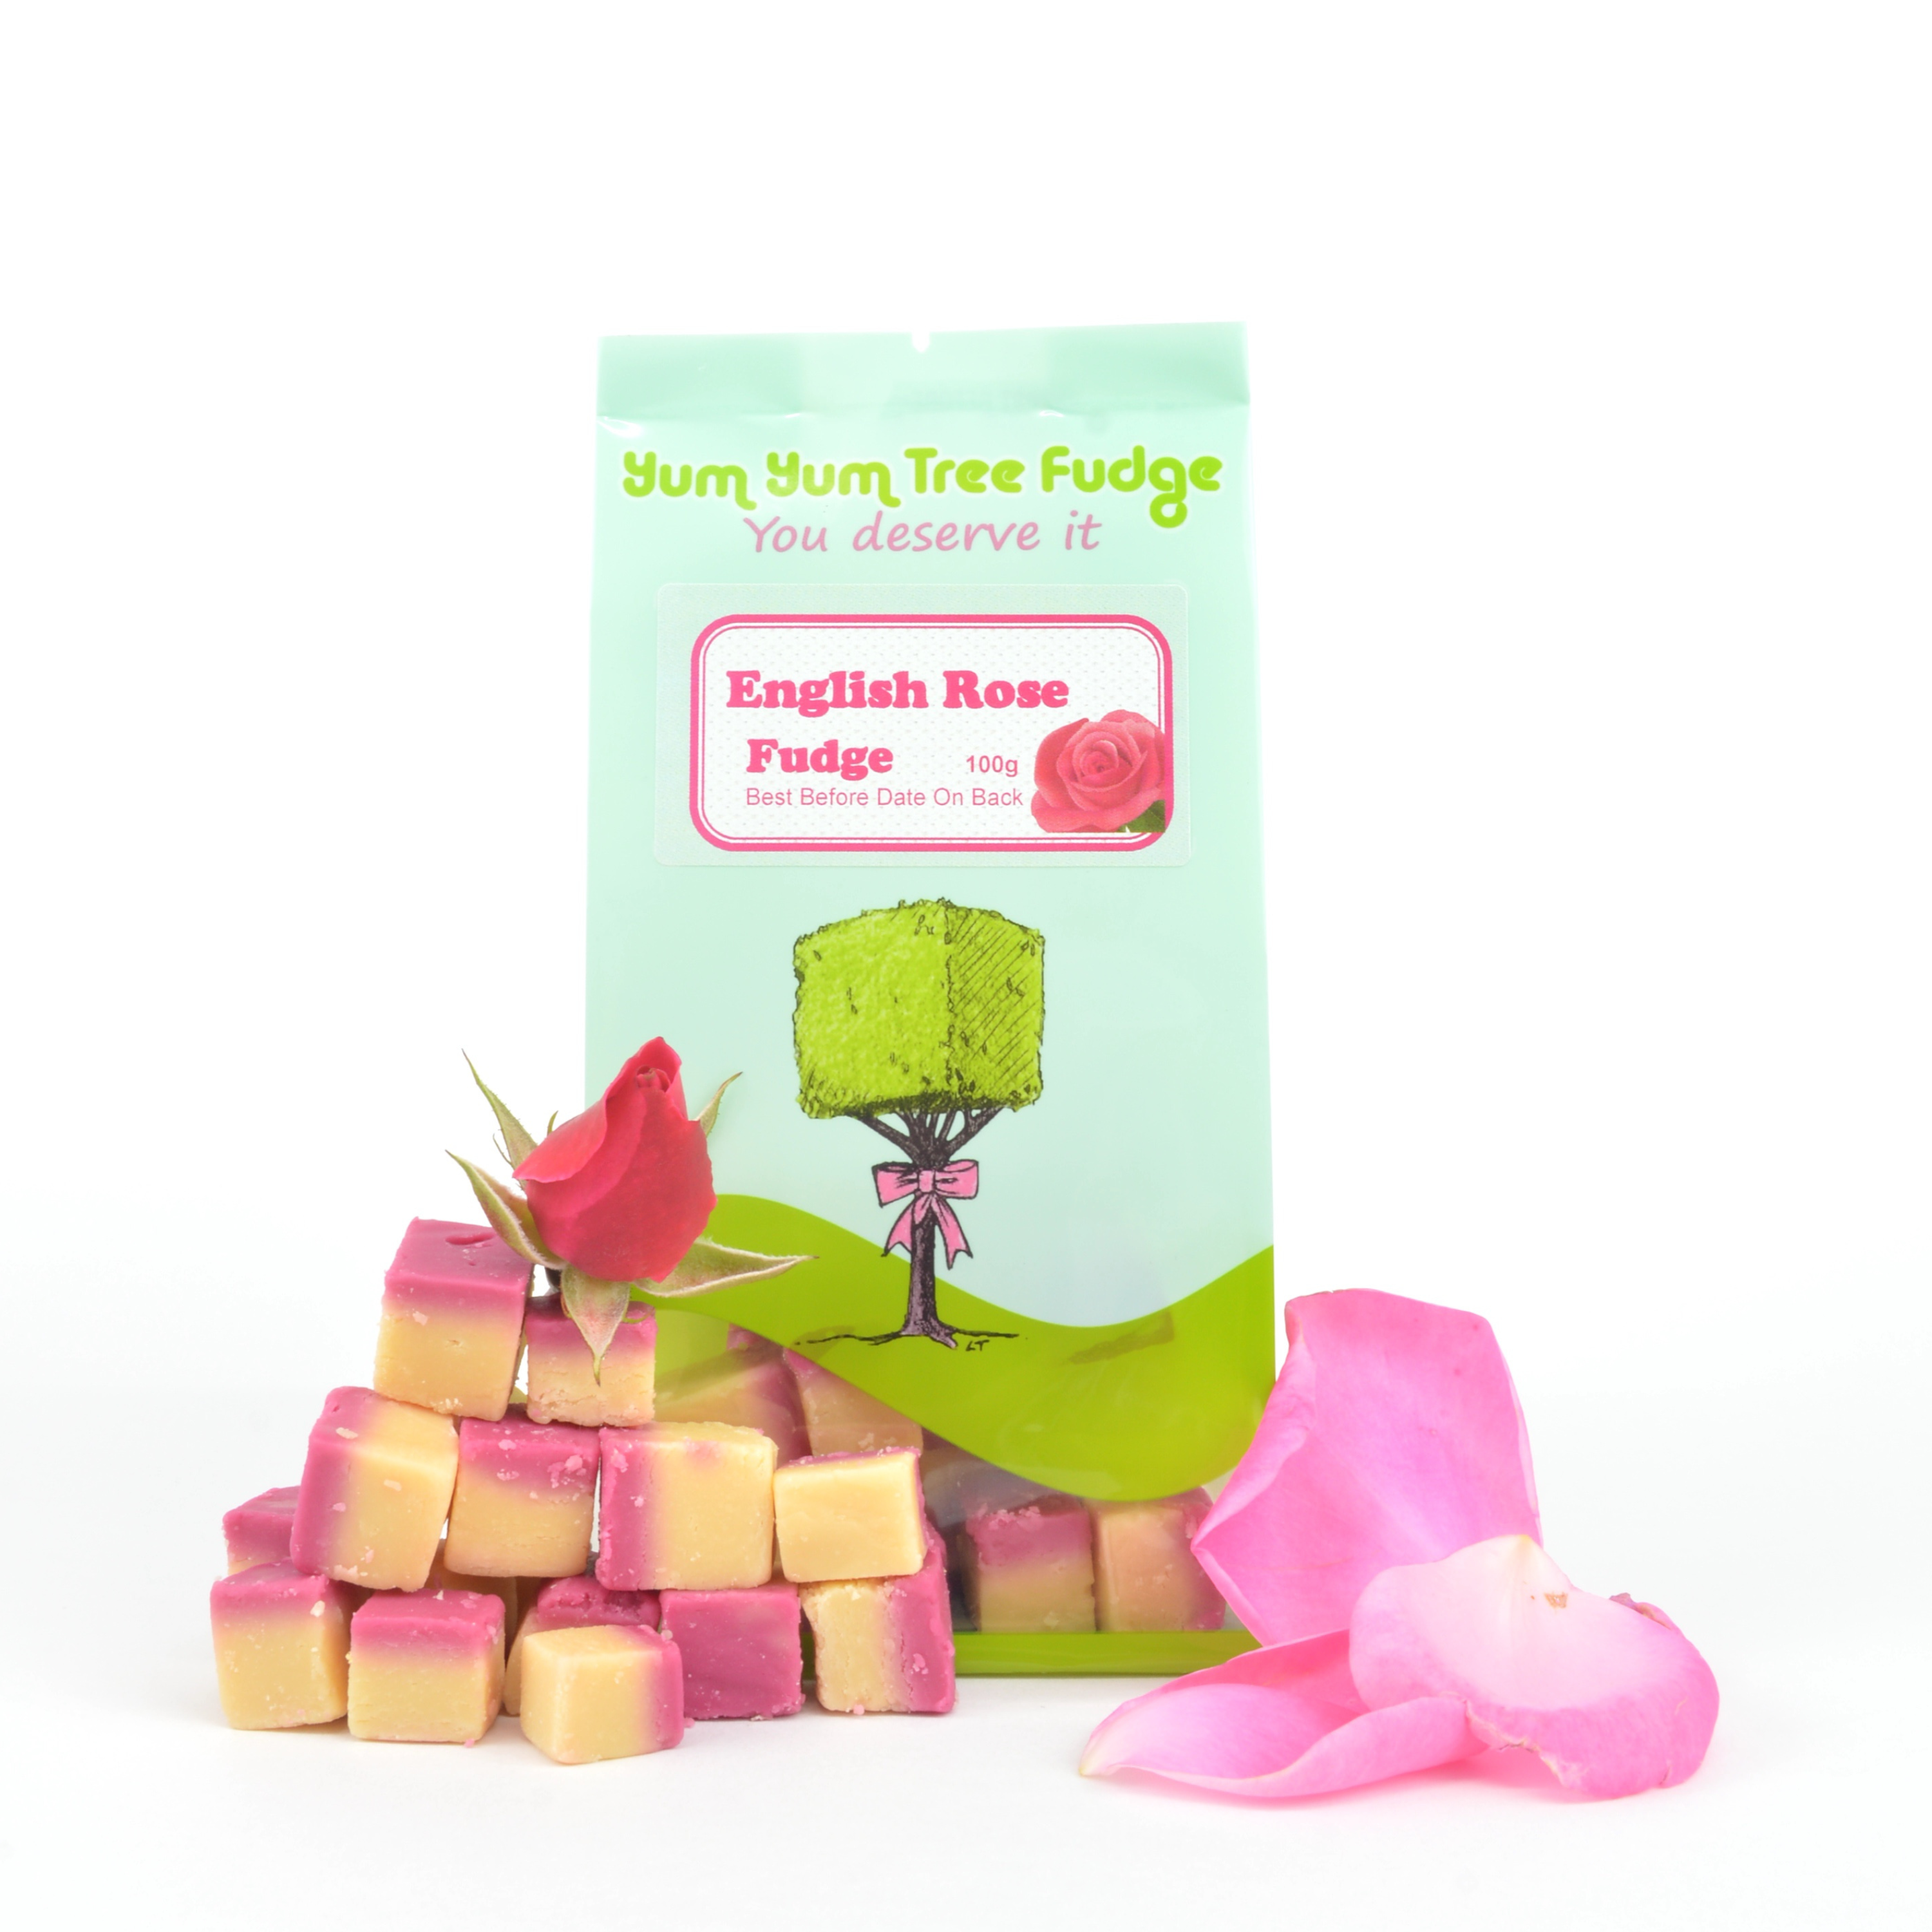 English Rose Fudge - Yum Yum Tree Fudge